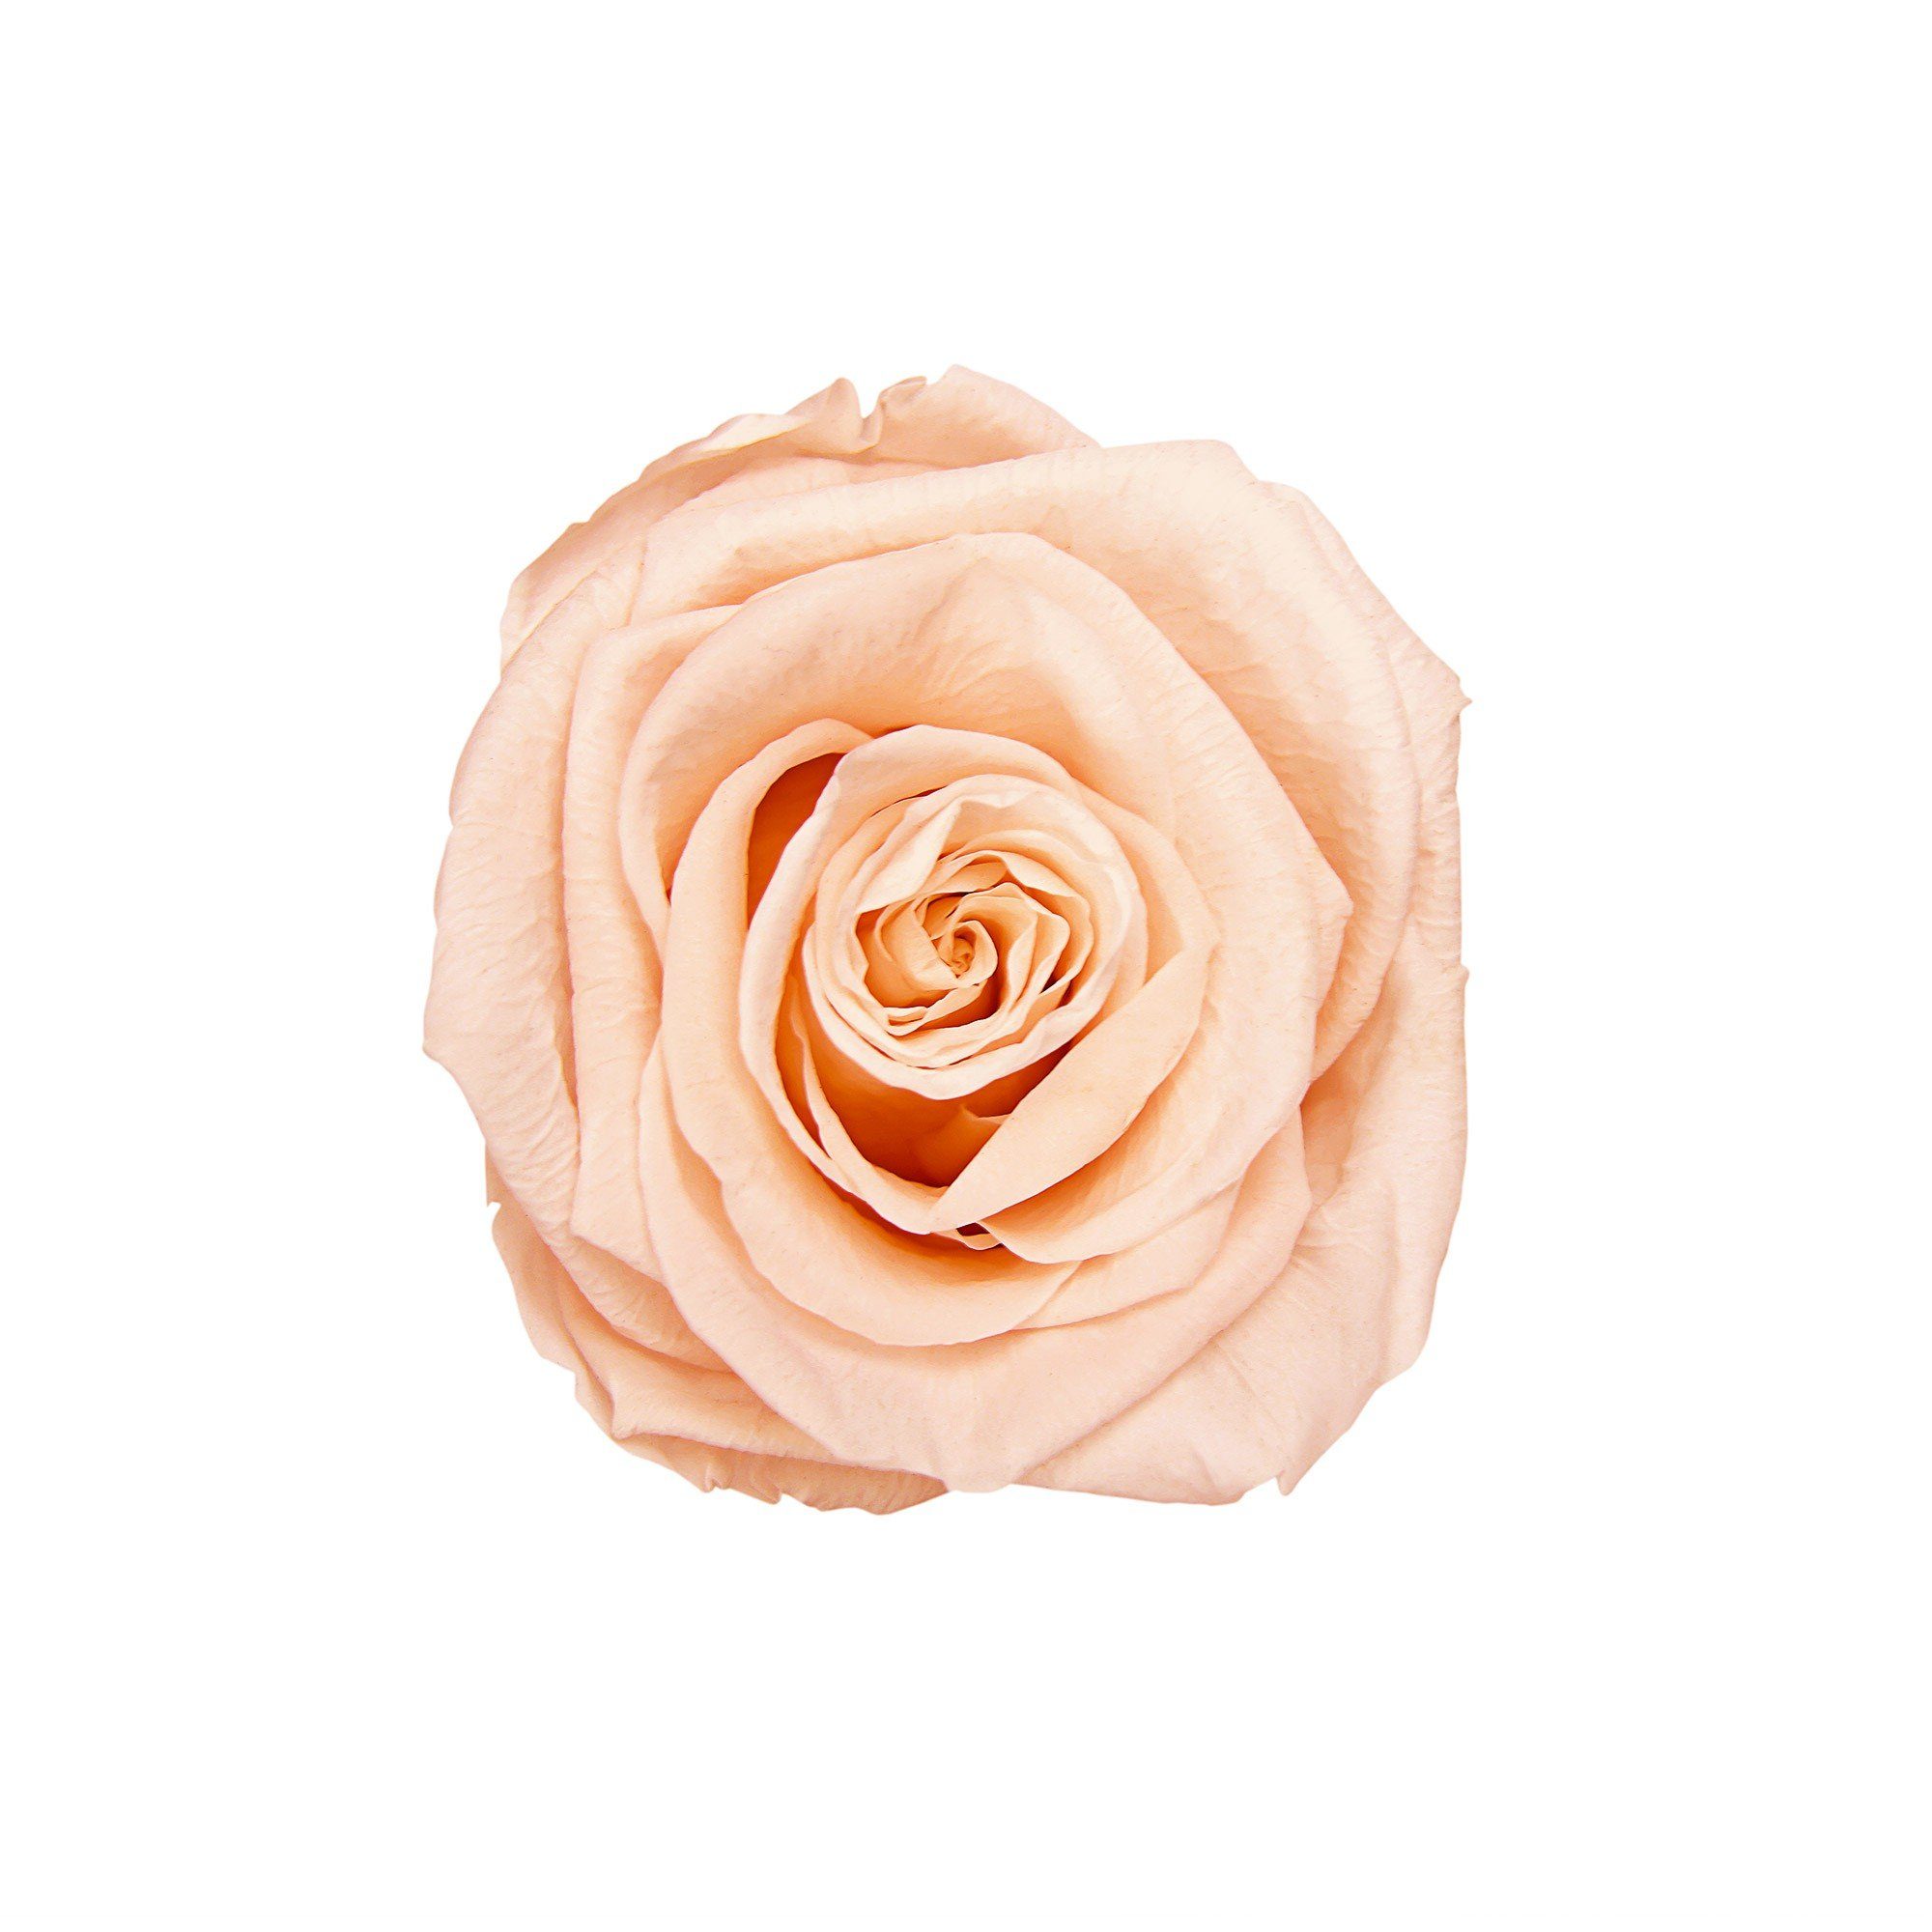 Höhe duftende Infinity Rose, Eckige 9 Raul 3 Rose mit Echte, 1er Jahre in by Richter Infinity konservierte I Kunstblume Flowers, I haltbar weiß Rosenbox Peach Holy cm I Blumen